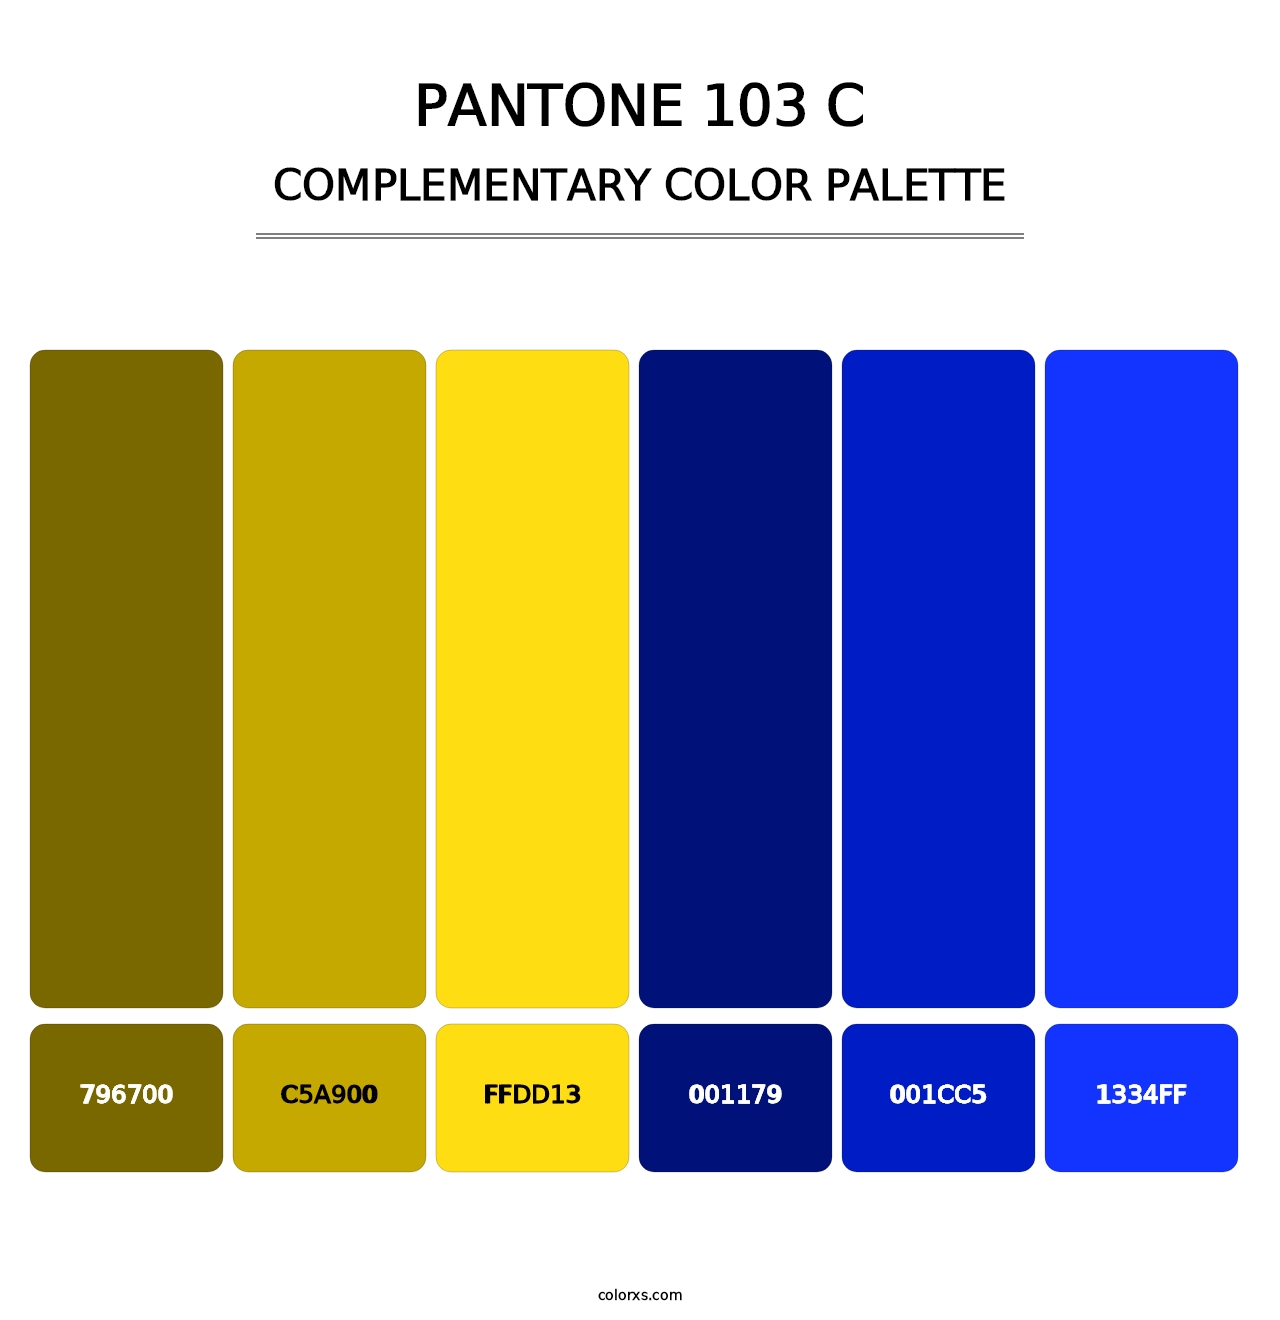 PANTONE 103 C - Complementary Color Palette